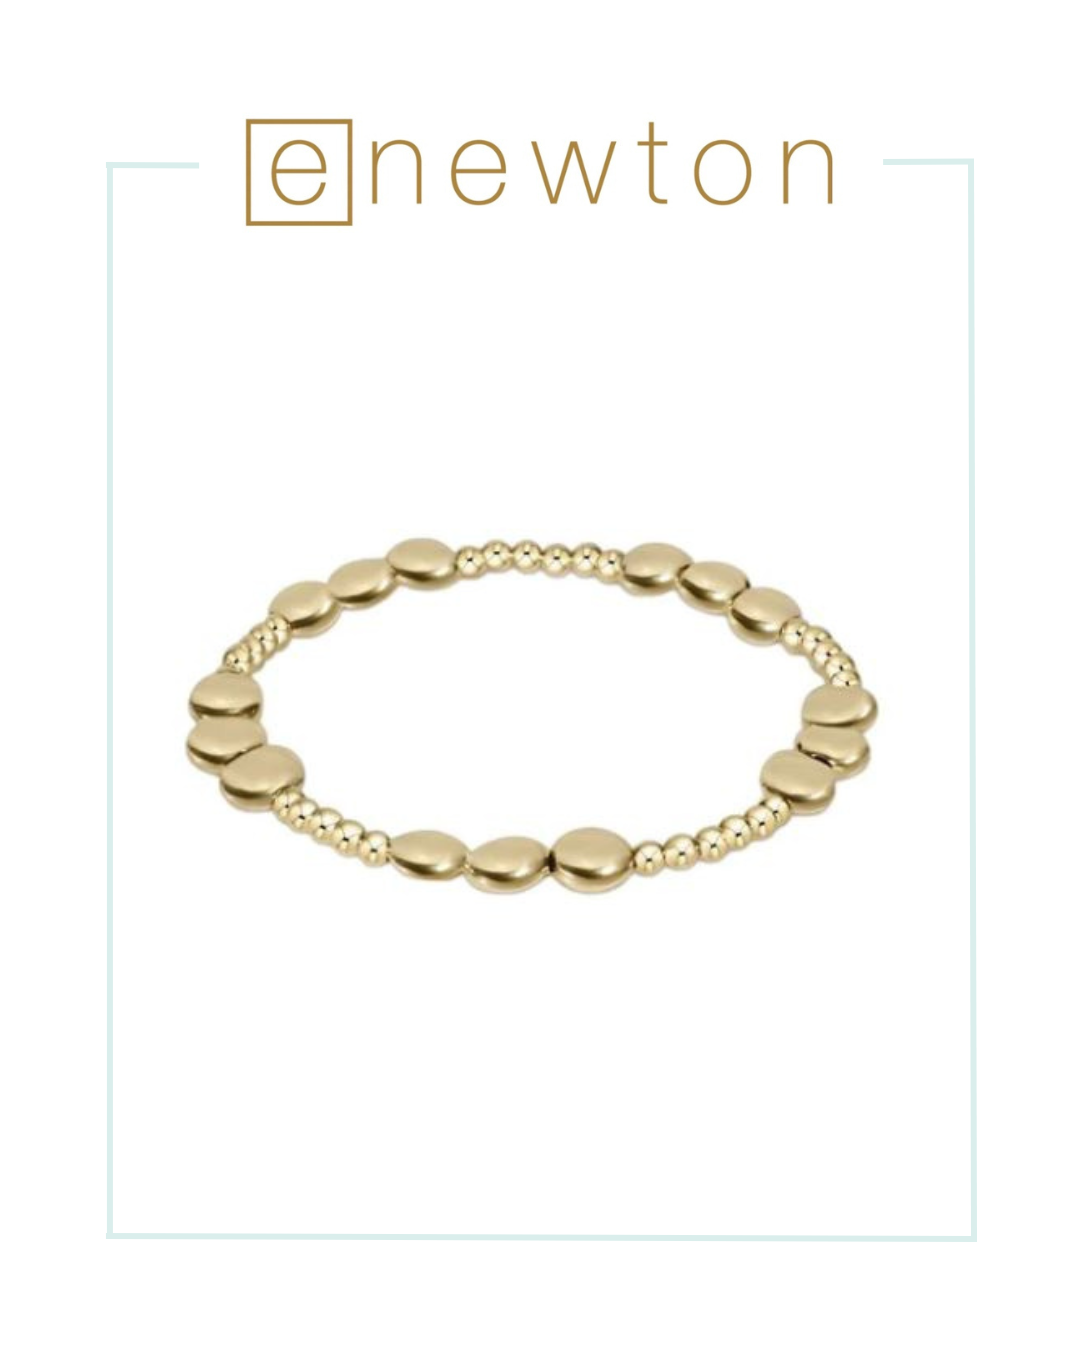 E Newton Honesty Joy Pattern 6mm Bead Bracelet - Gold-Bracelets-ENEWTON-The Village Shoppe, Women’s Fashion Boutique, Shop Online and In Store - Located in Muscle Shoals, AL.